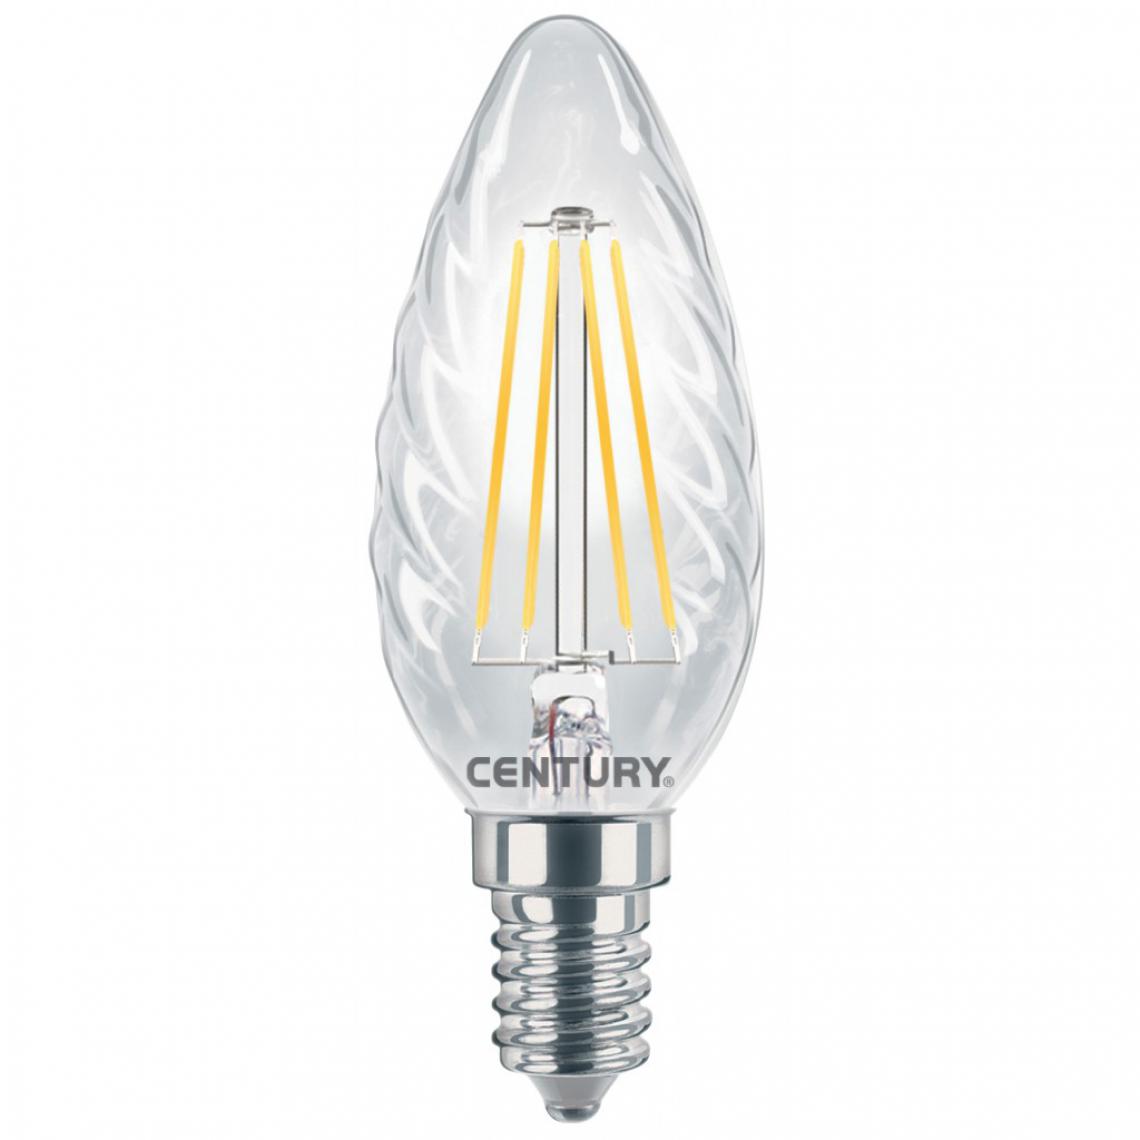 Alpexe - Lampe LED Vintage 4 W 440 lm 2700 K - Ampoules LED